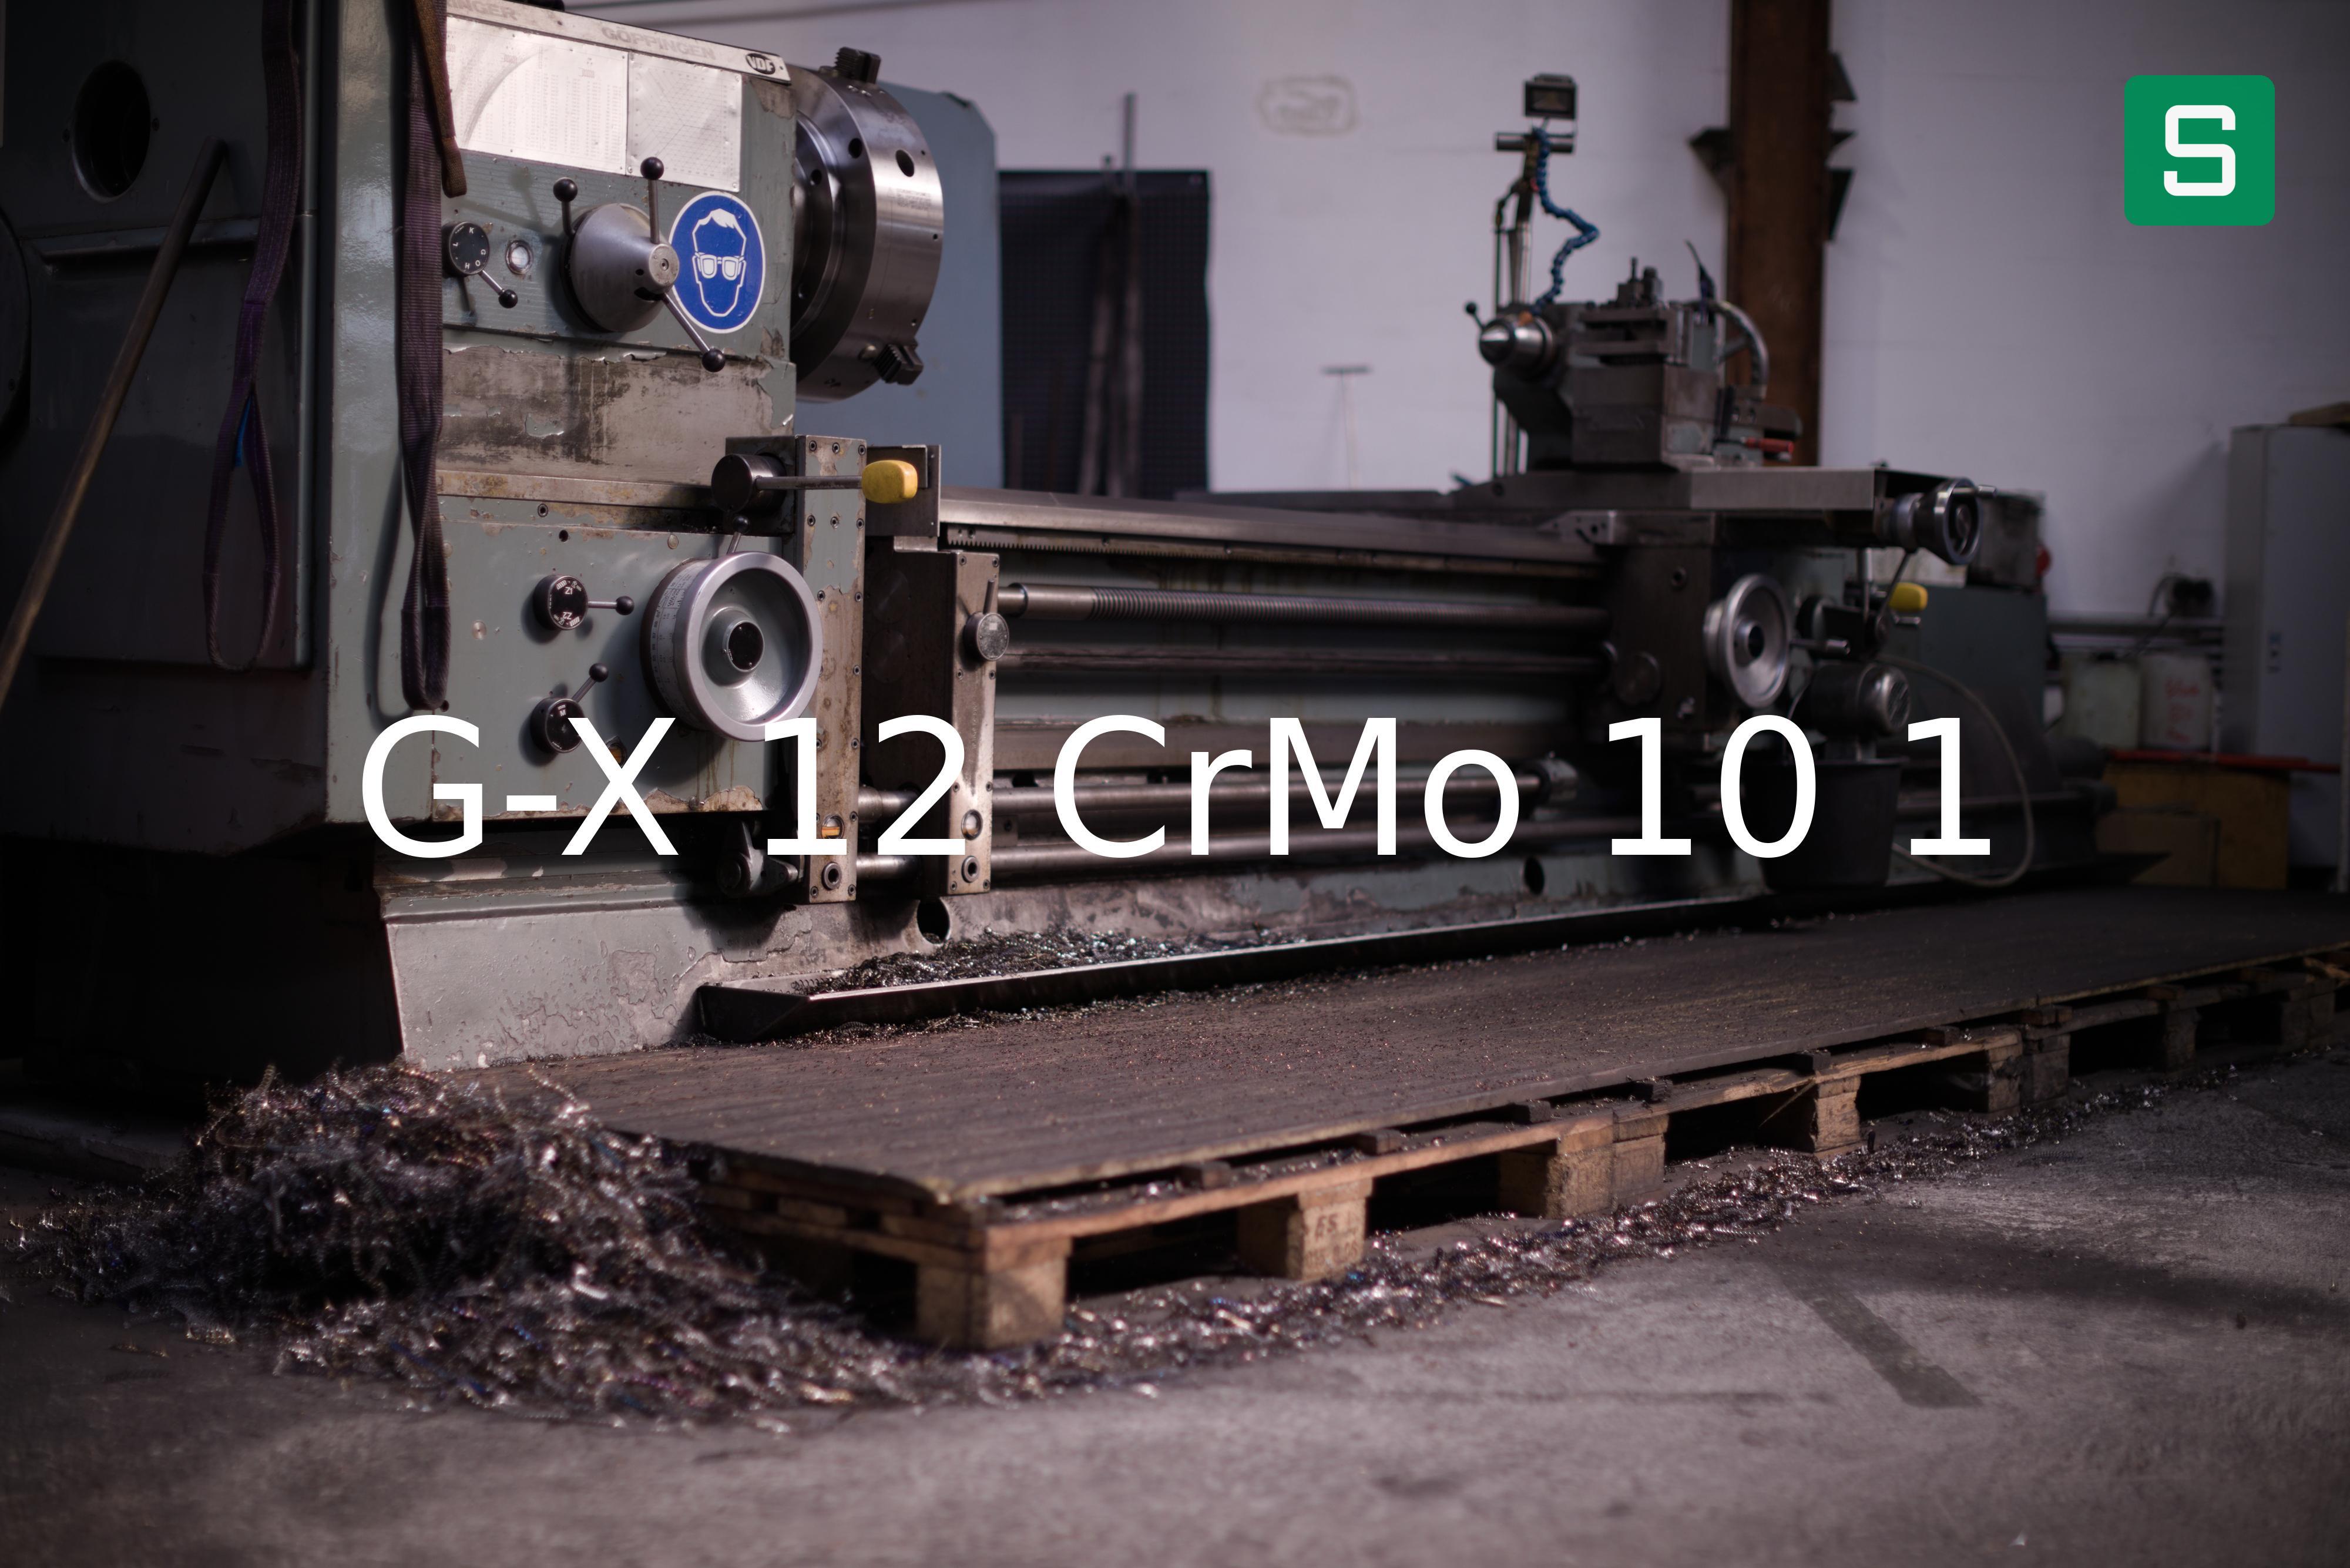 Steel Material: G-X 12 CrMo 10 1